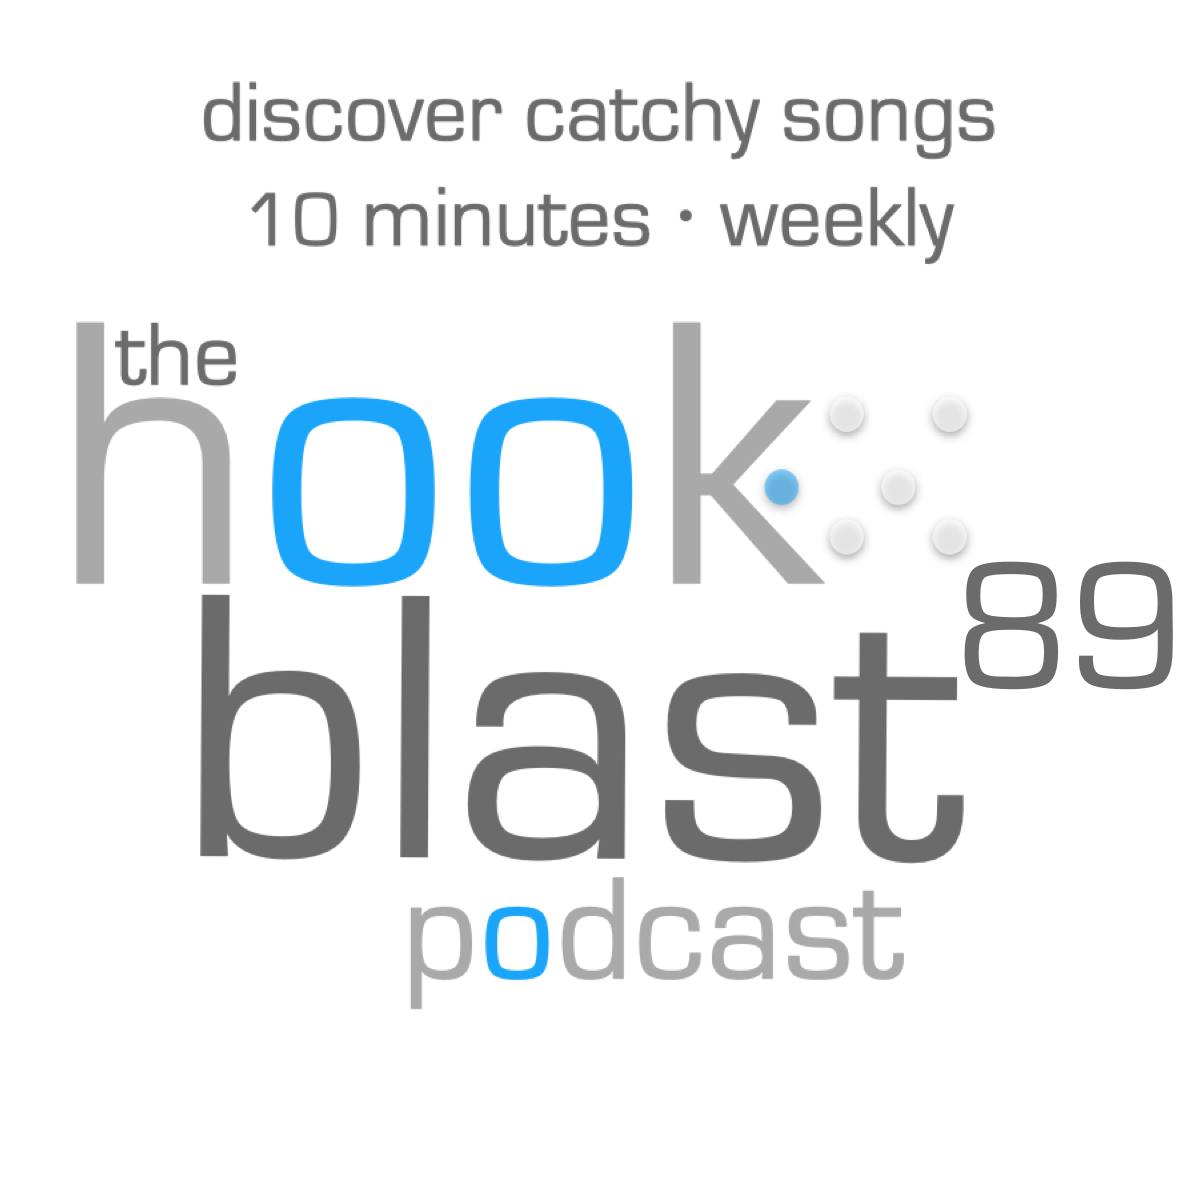 The Hookblast Podcast - Episode 89